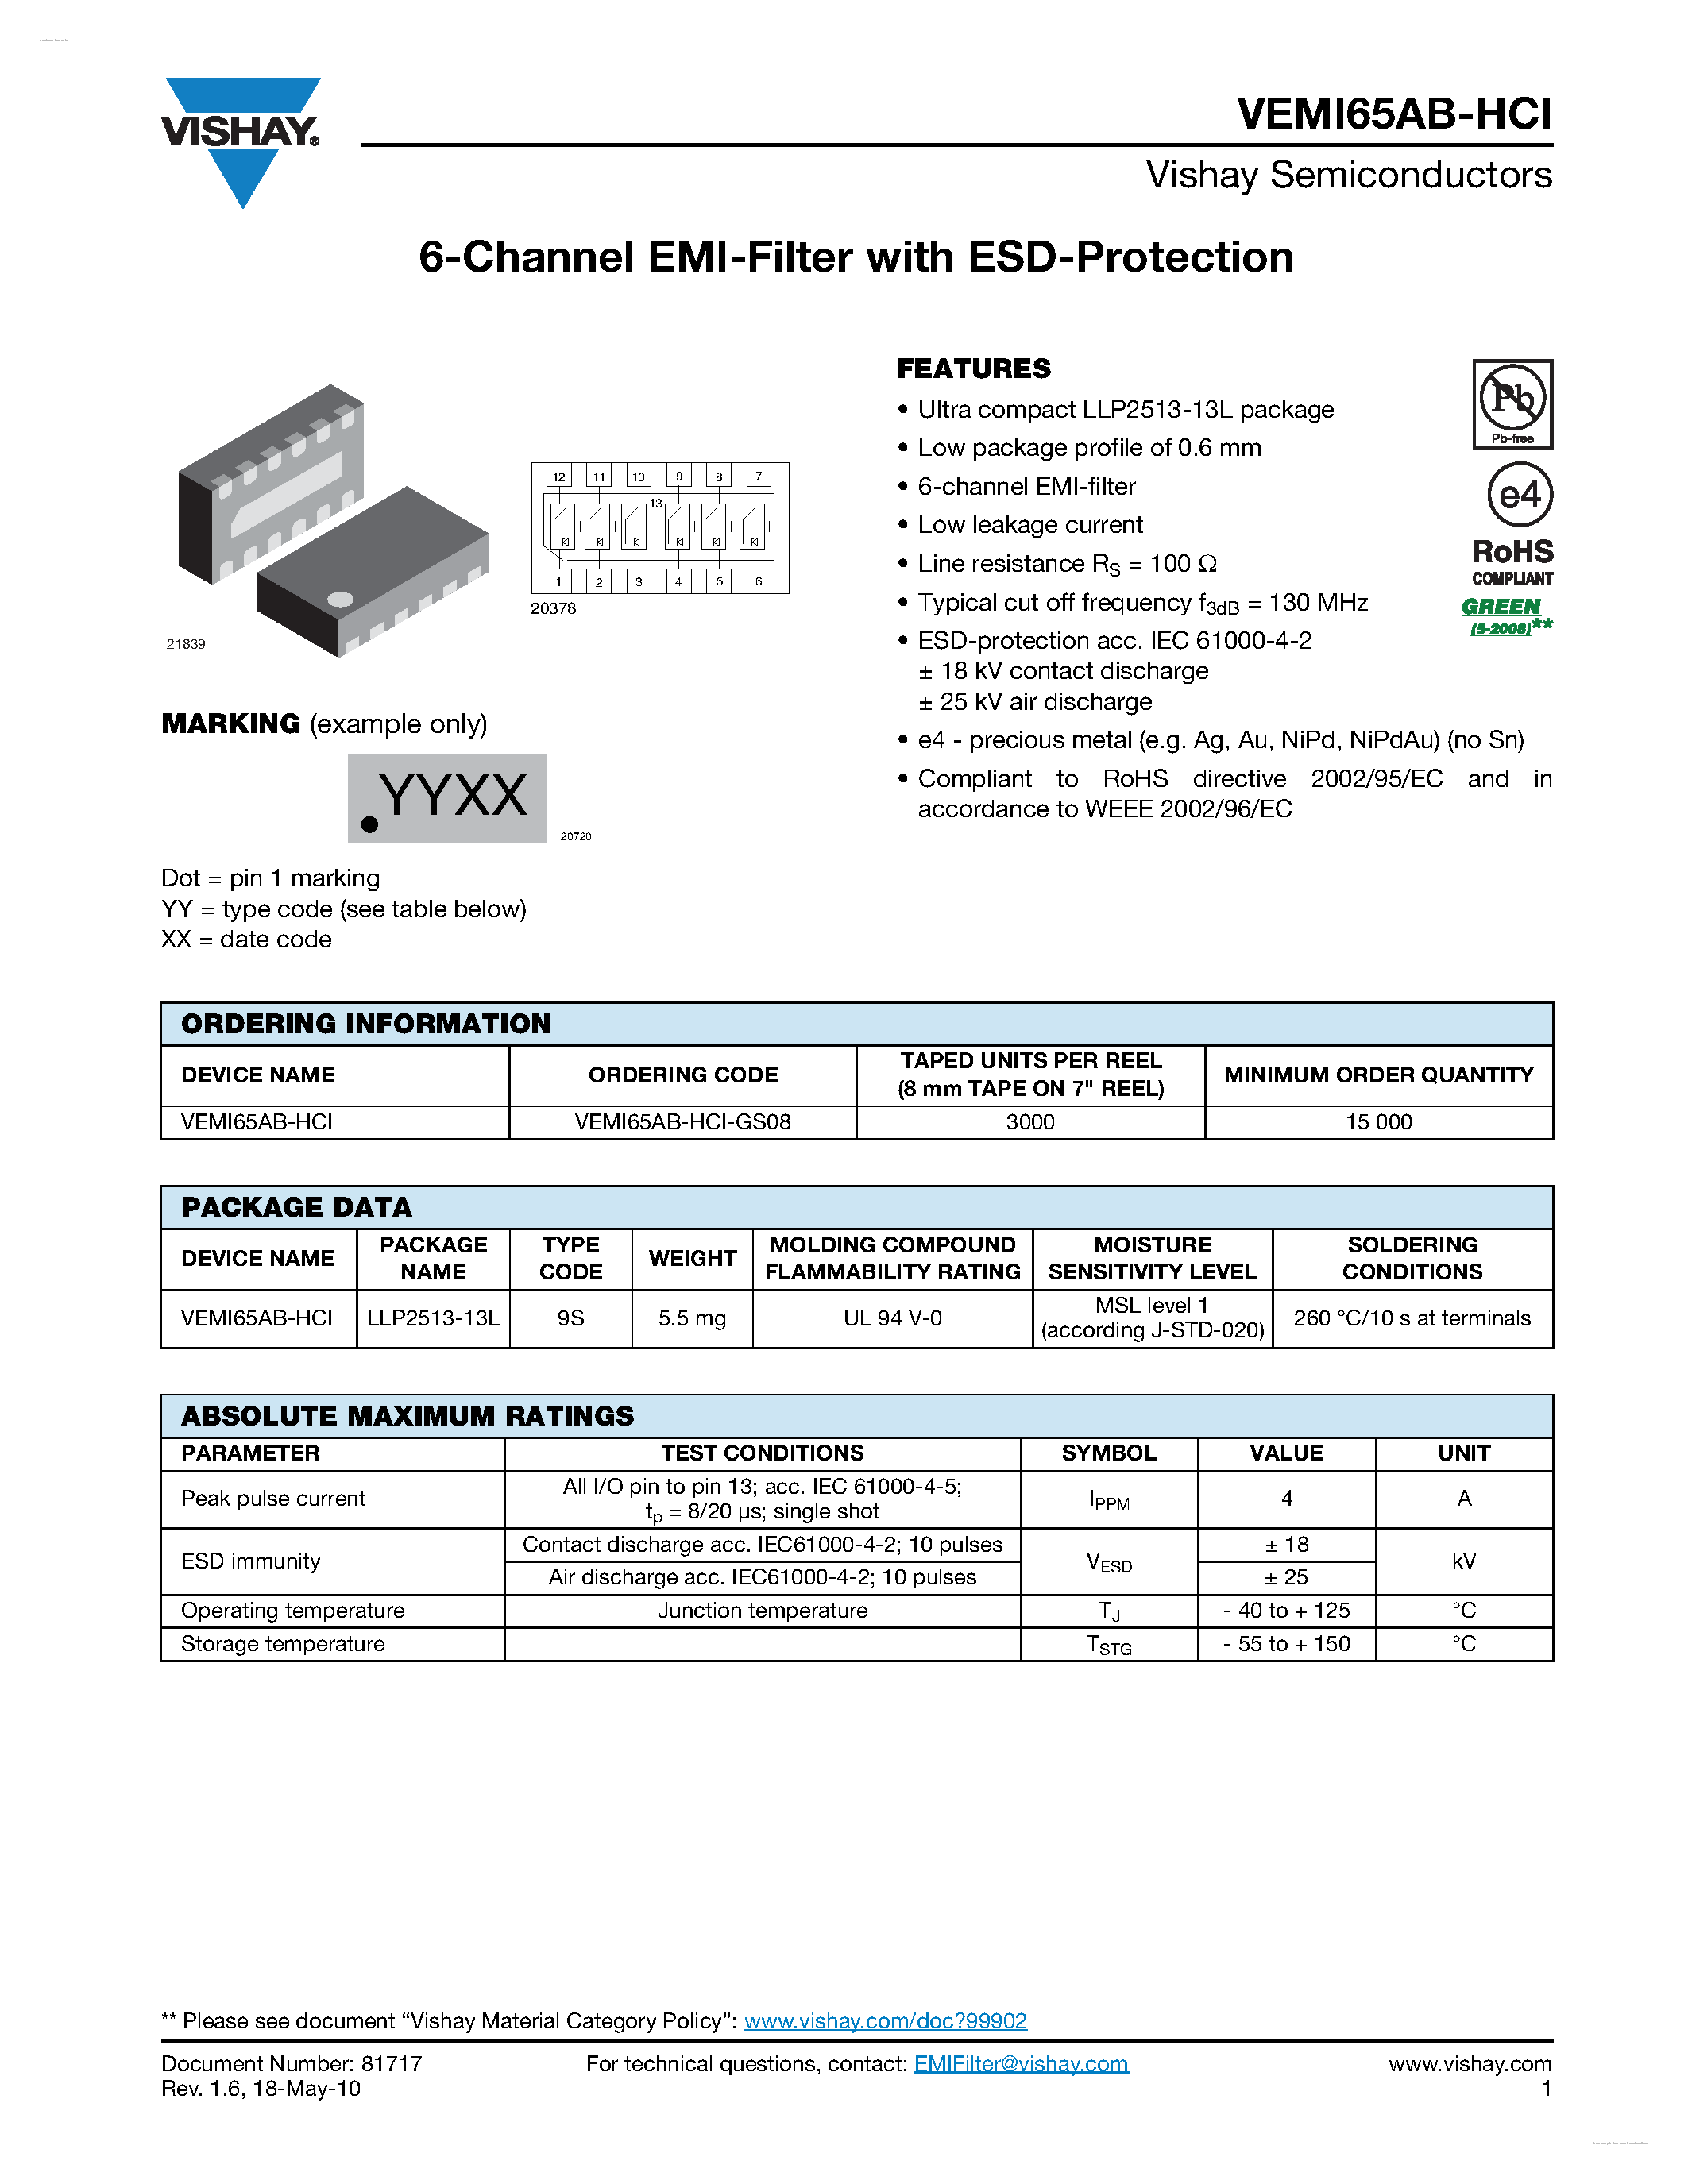 Datasheet VEMI65AB-HCI - 6-Channel EMI-Filter page 1